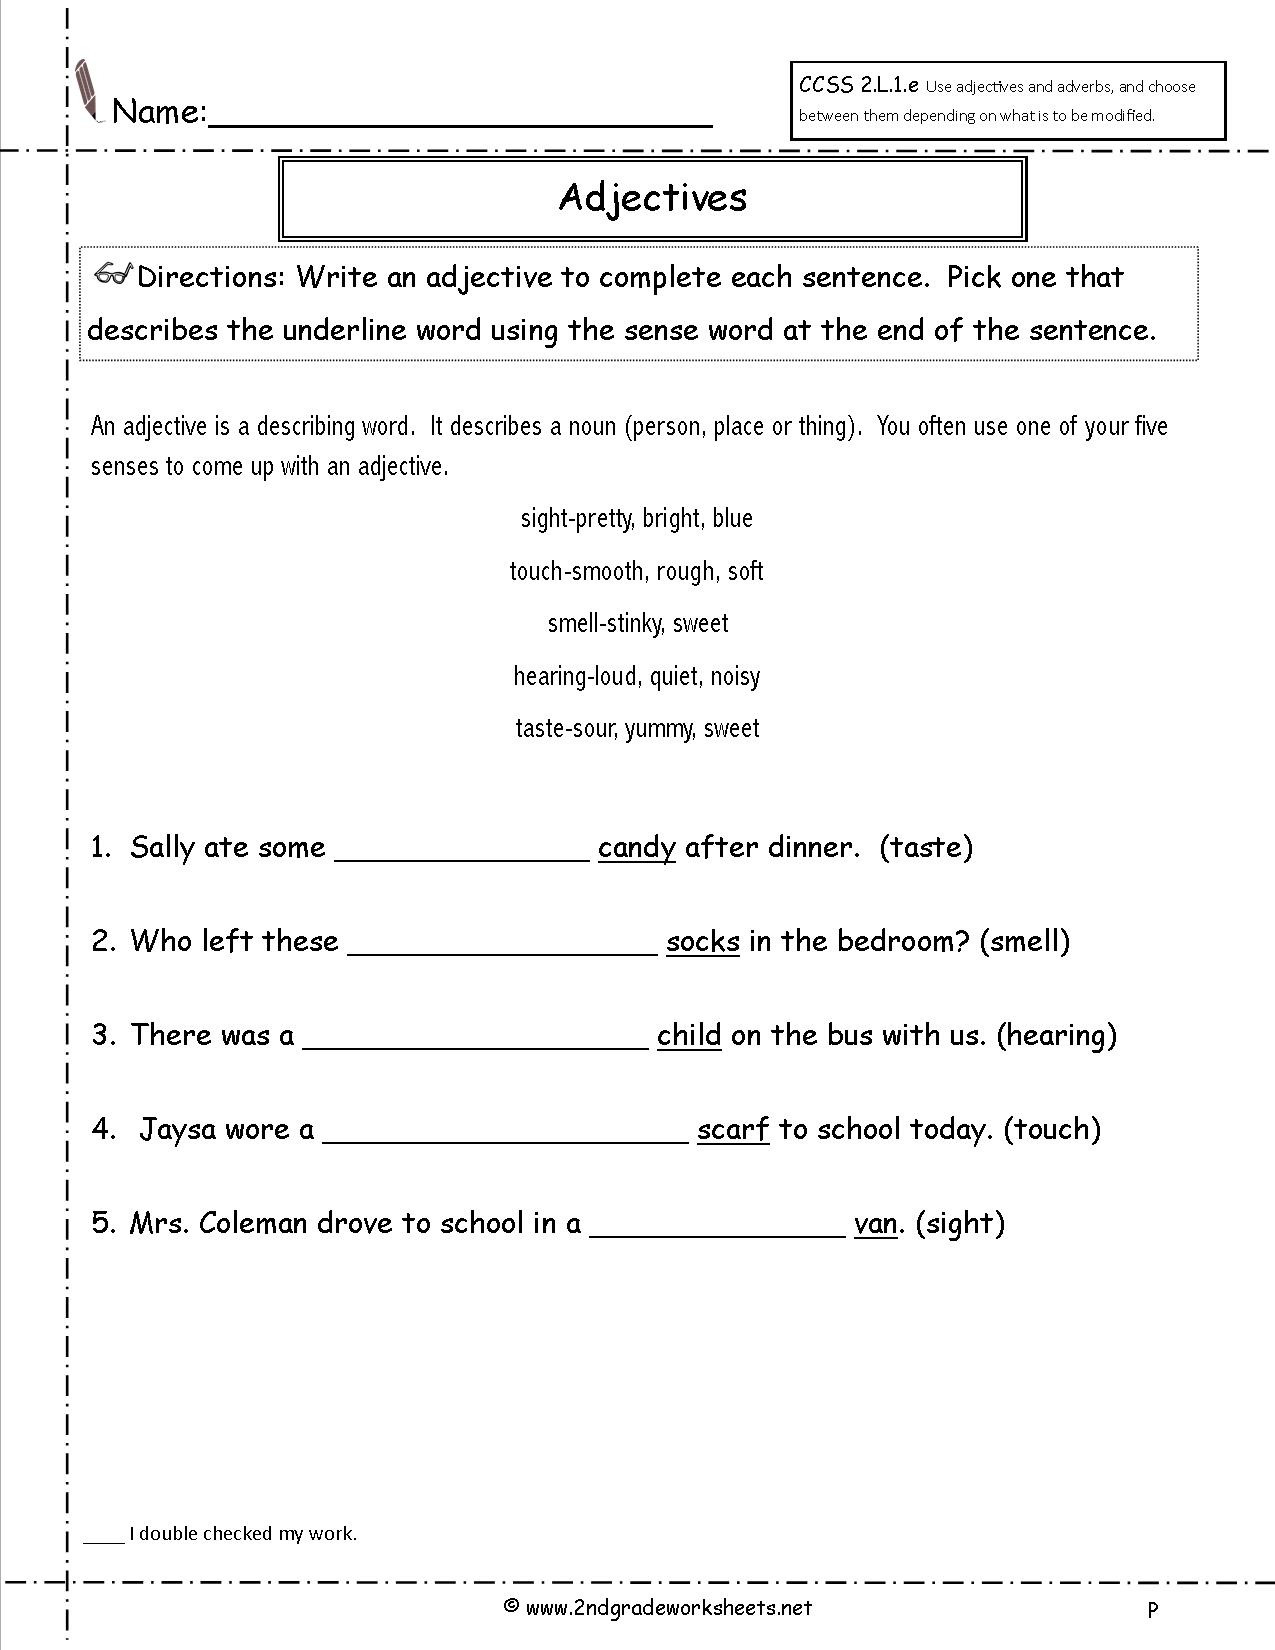 adverbs-worksheets-have-fun-teaching